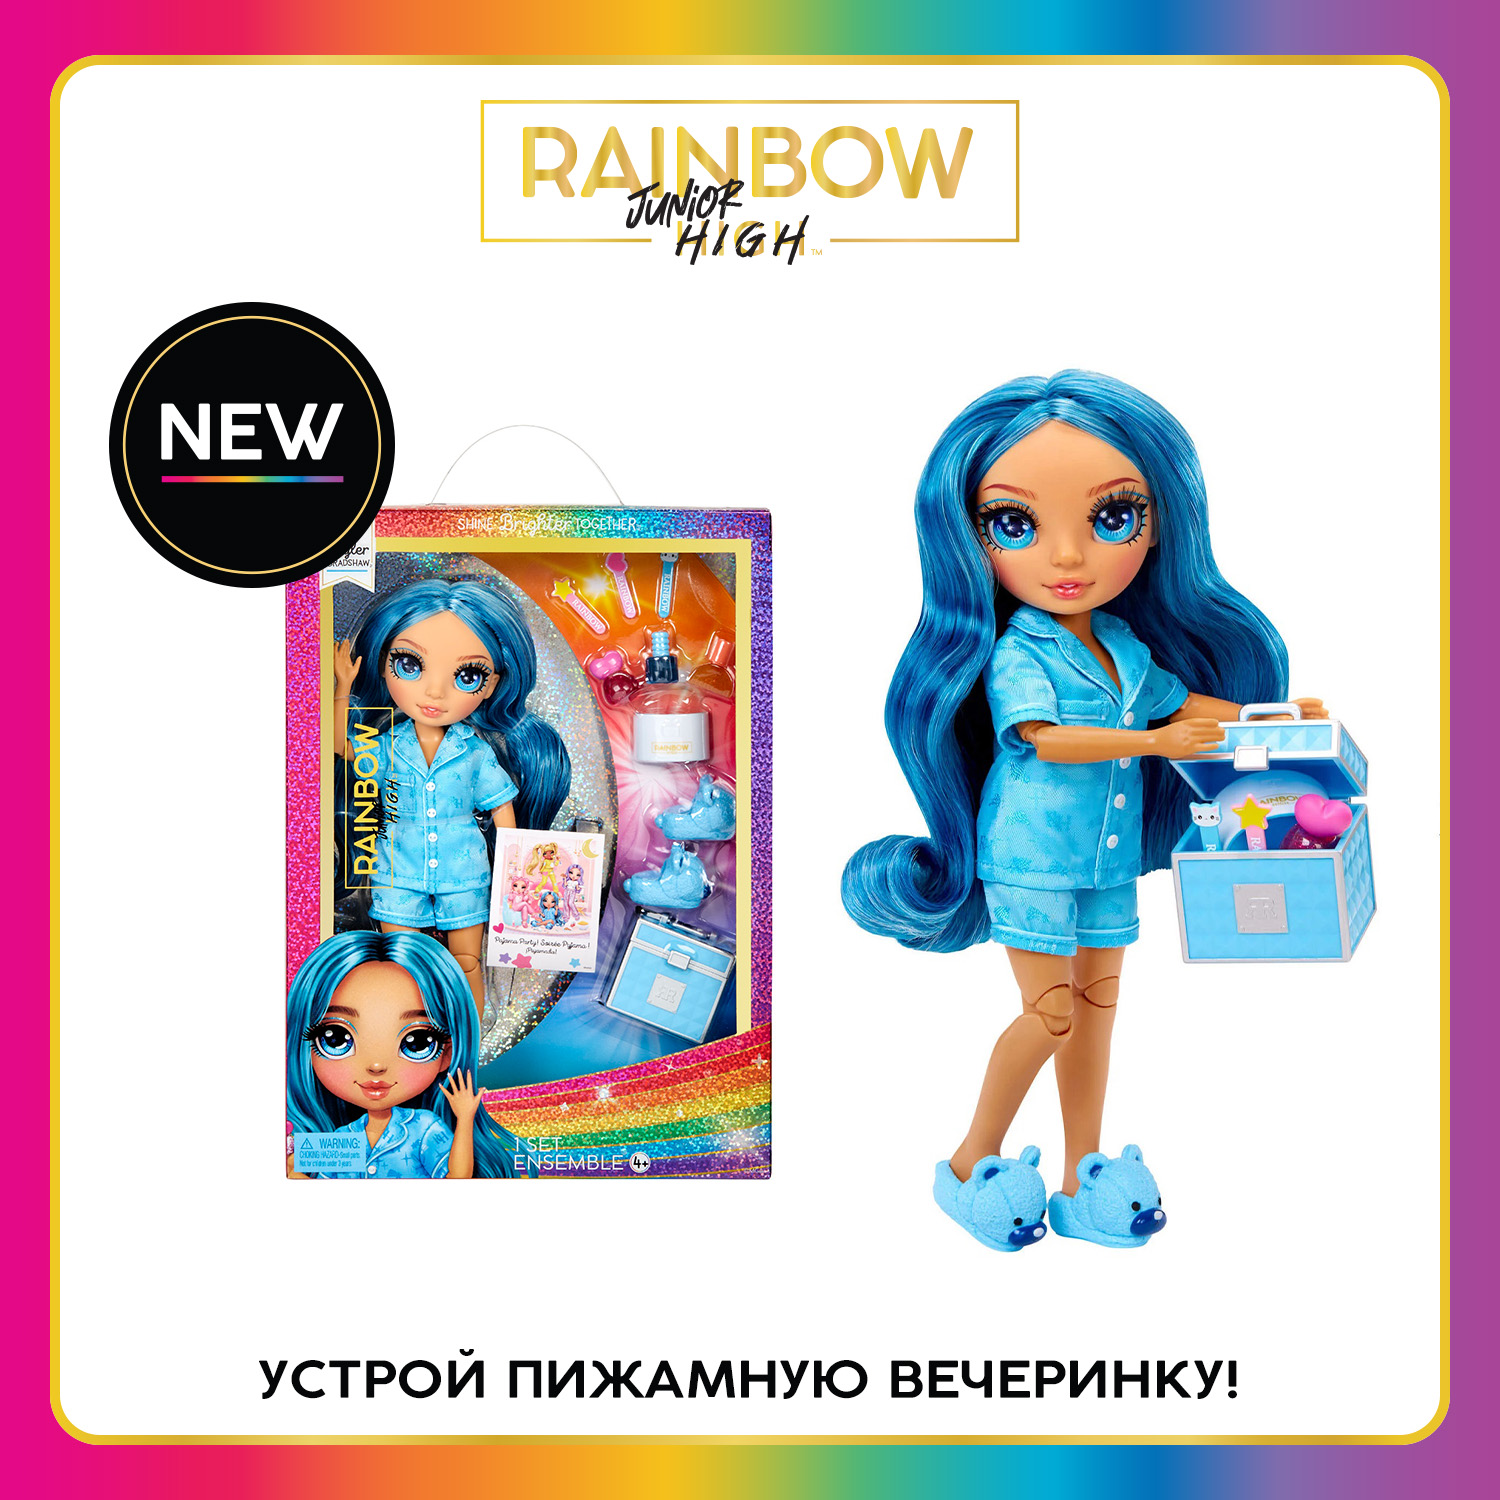 Кукла Rainbow HighJunior PJ Party Скайлер голубая с аксессуарами